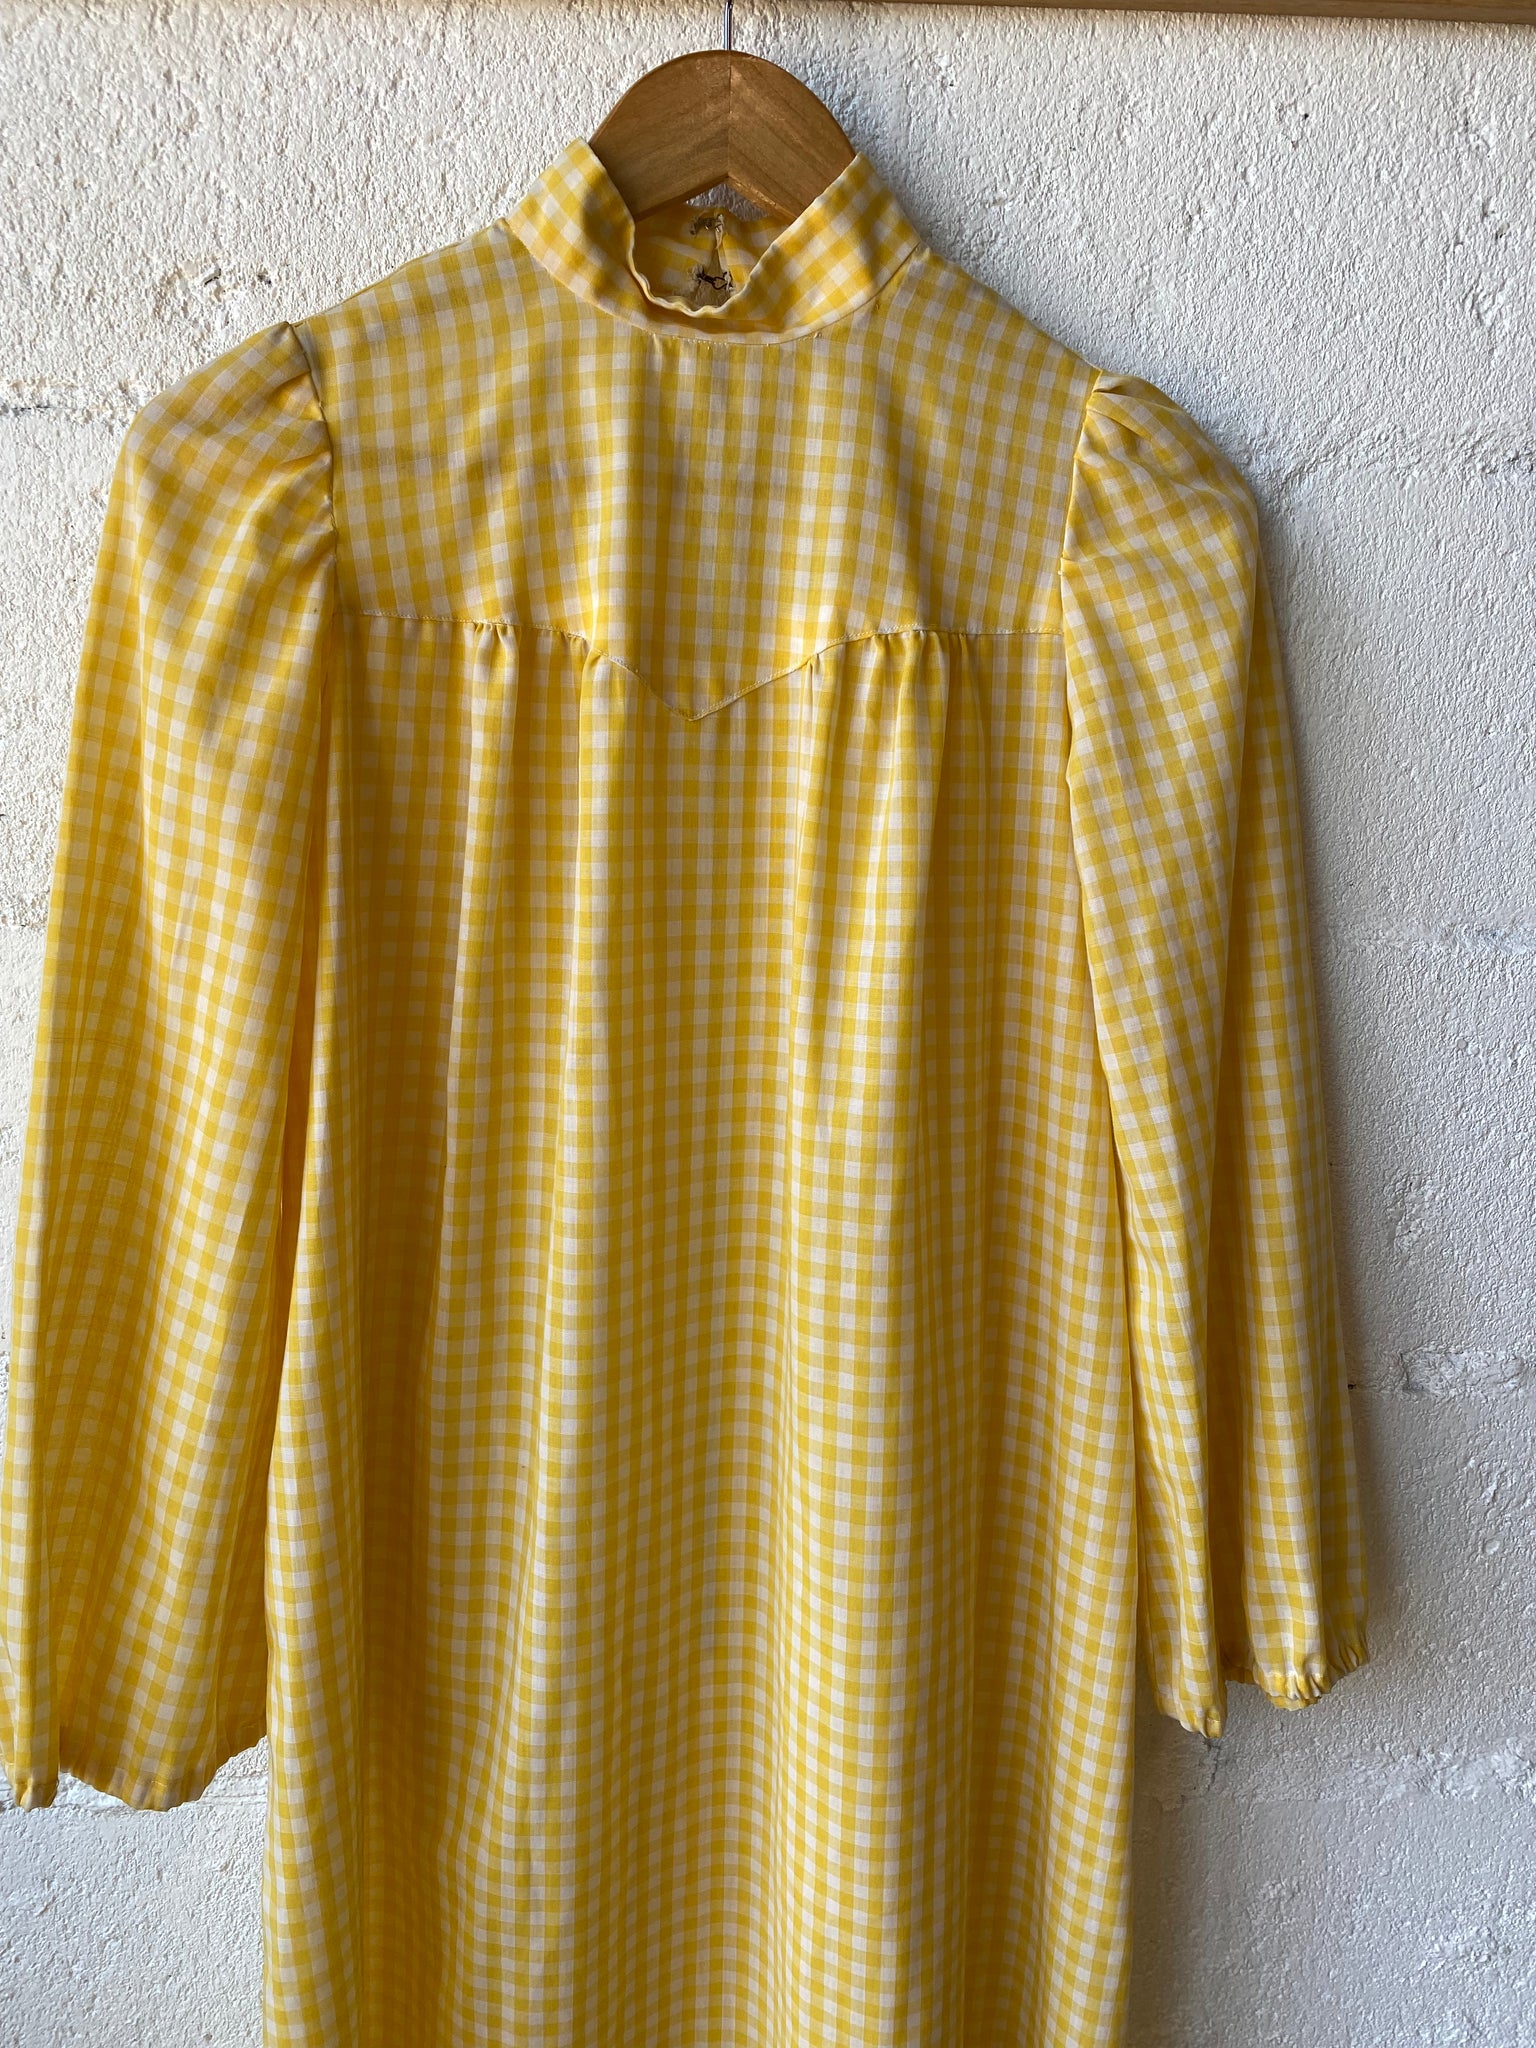 Vintage Handmade Yellow Gingham Prairie Dress